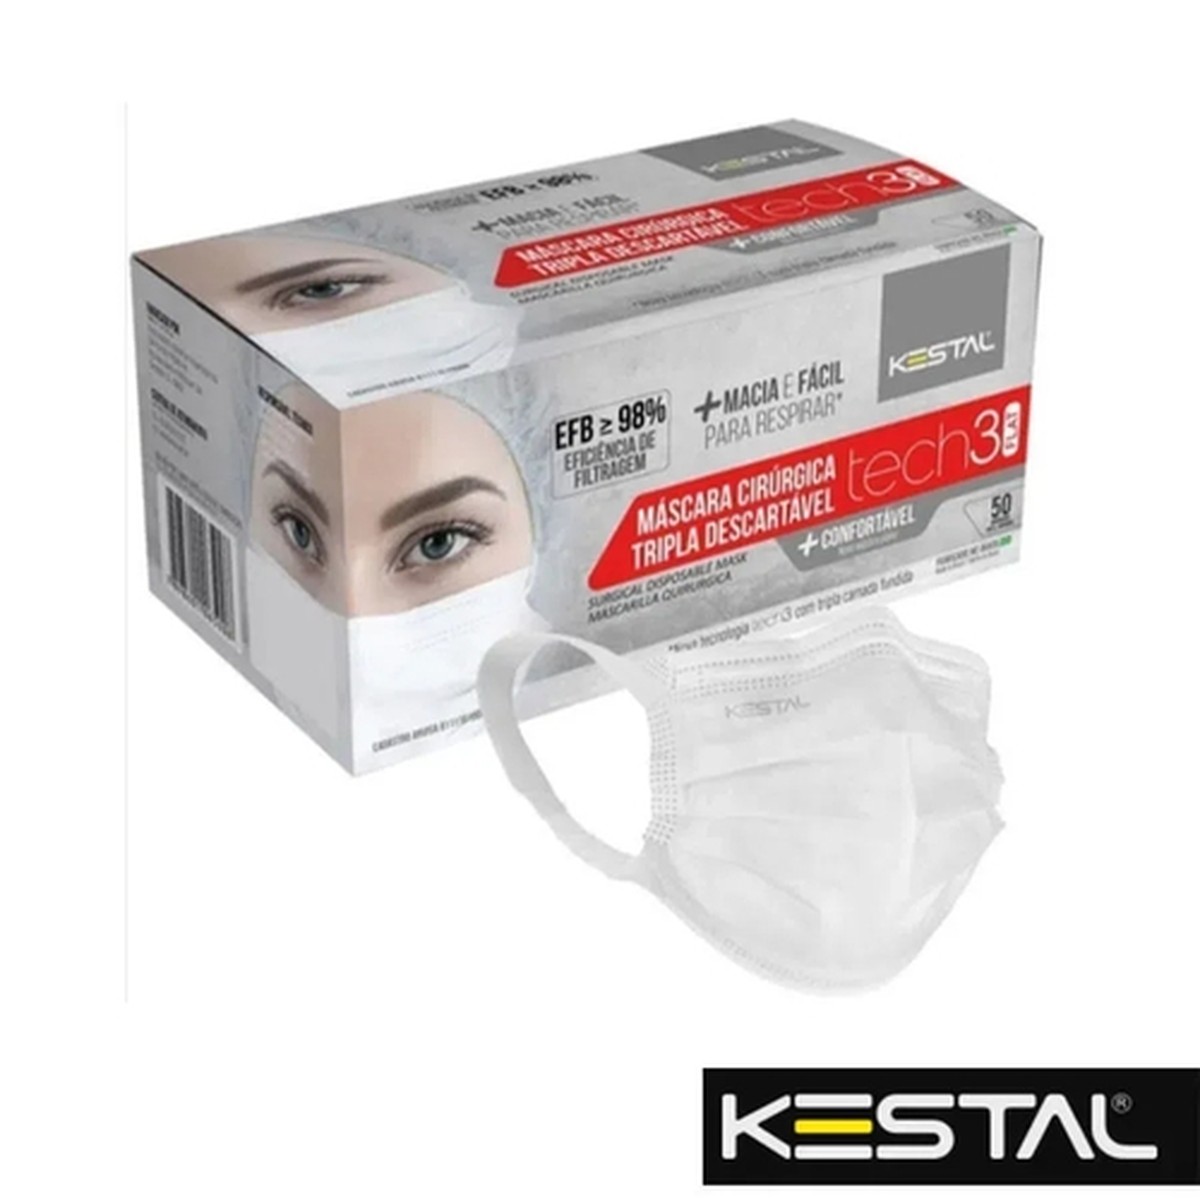 Foto do produto Mascara Cirúrgica Tripla Tech3 FLAT CX/50 Unid. - Kestal 